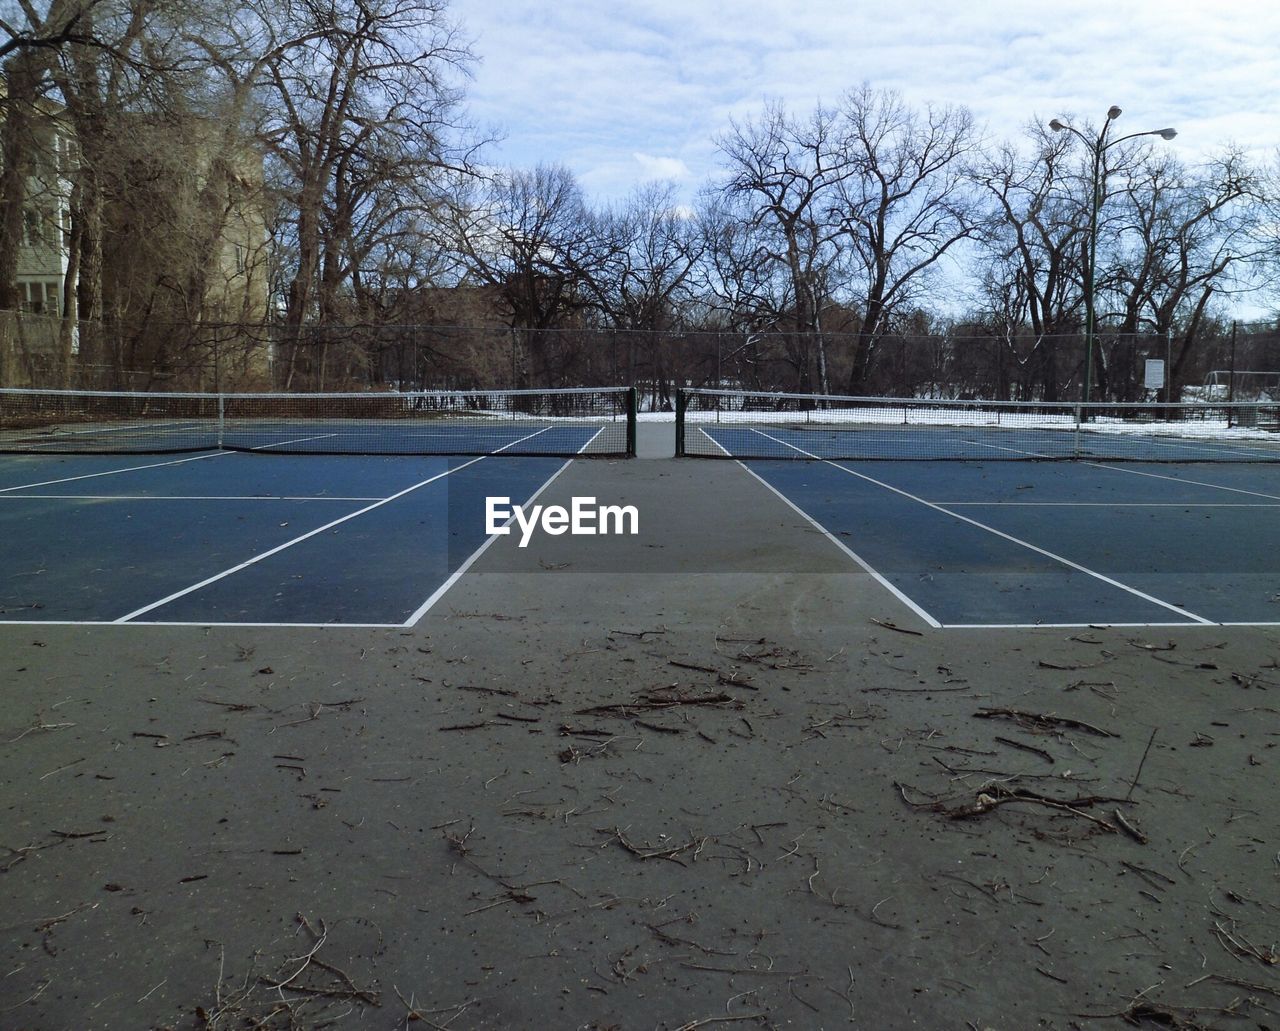 Empty tennis court against sky